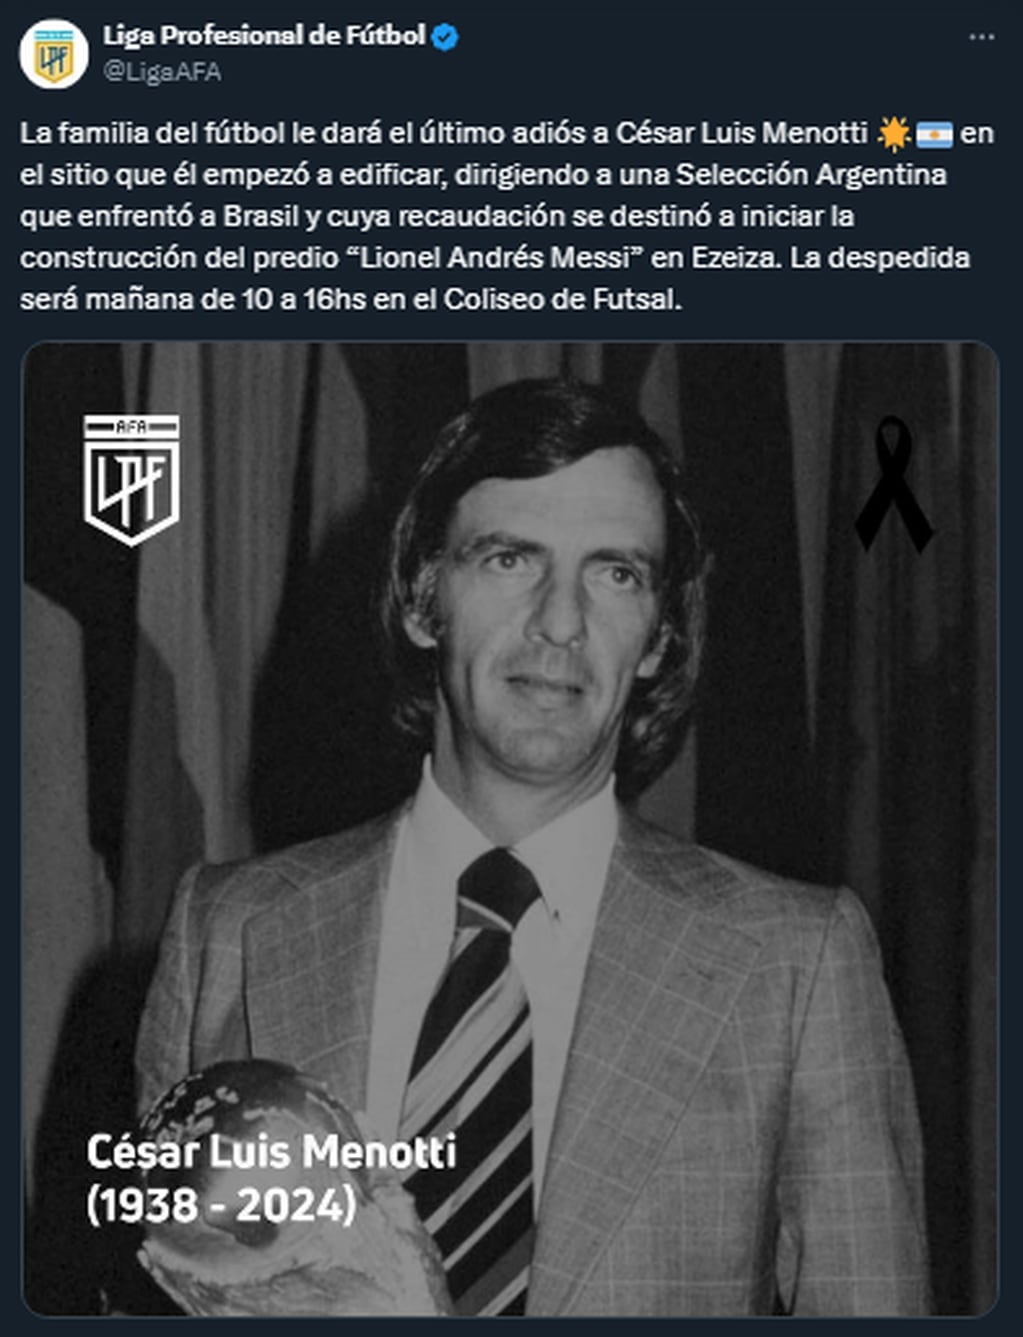 La despedida a César Luis Menotti